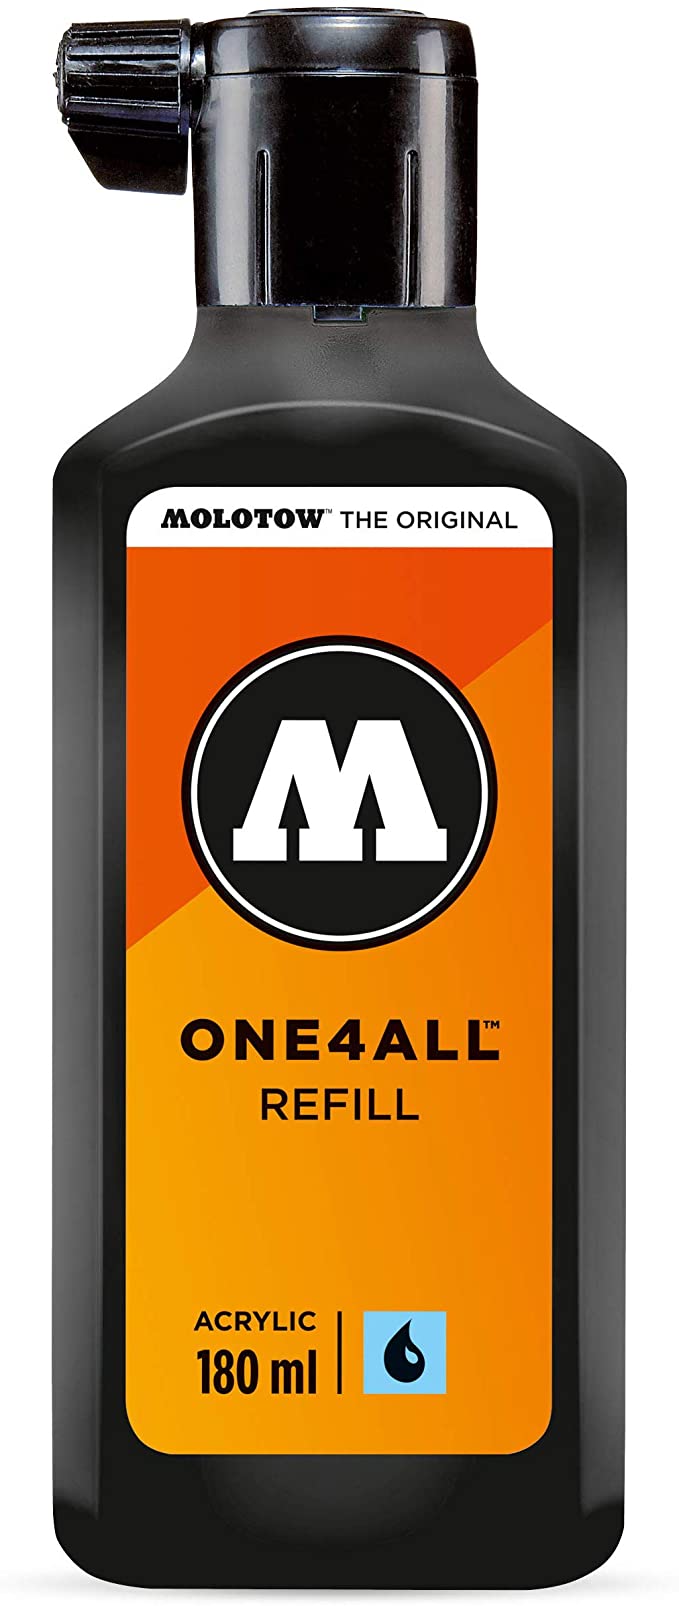 Molotow One4All Acrylic Refill 180ML